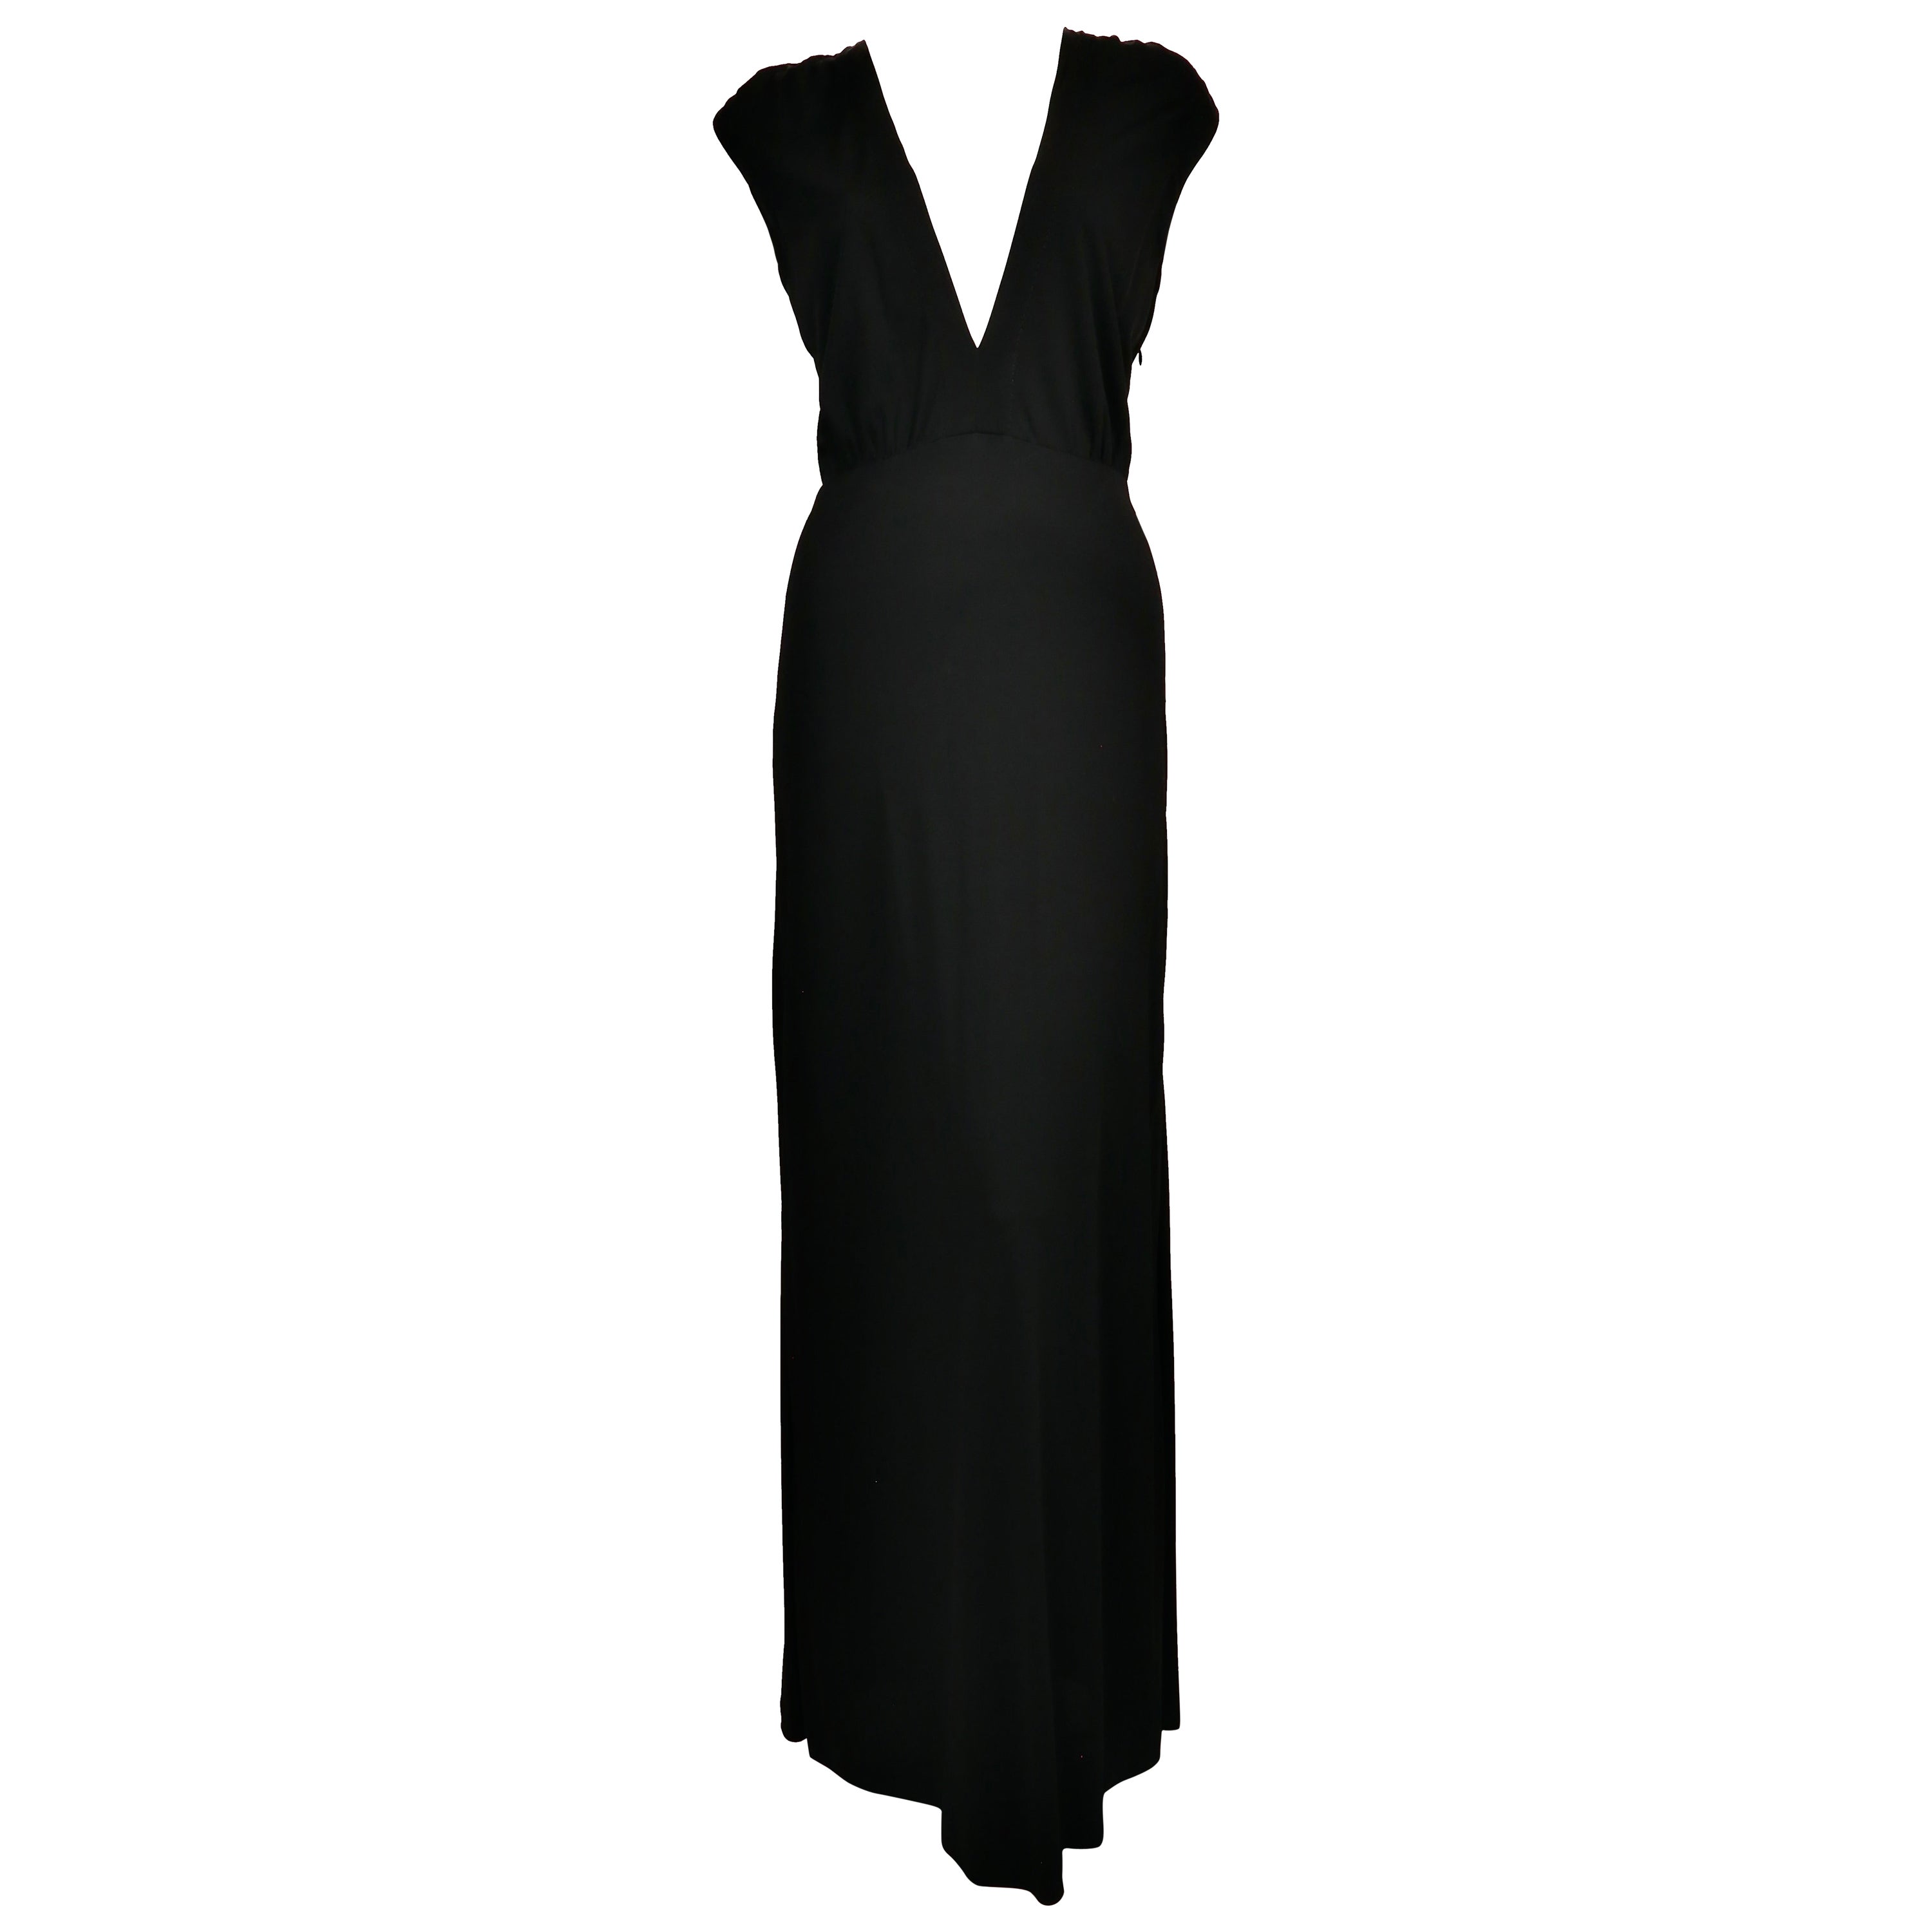 MARTIN MARGIELA RUNWAY Replica '1970's evening dress' For Sale